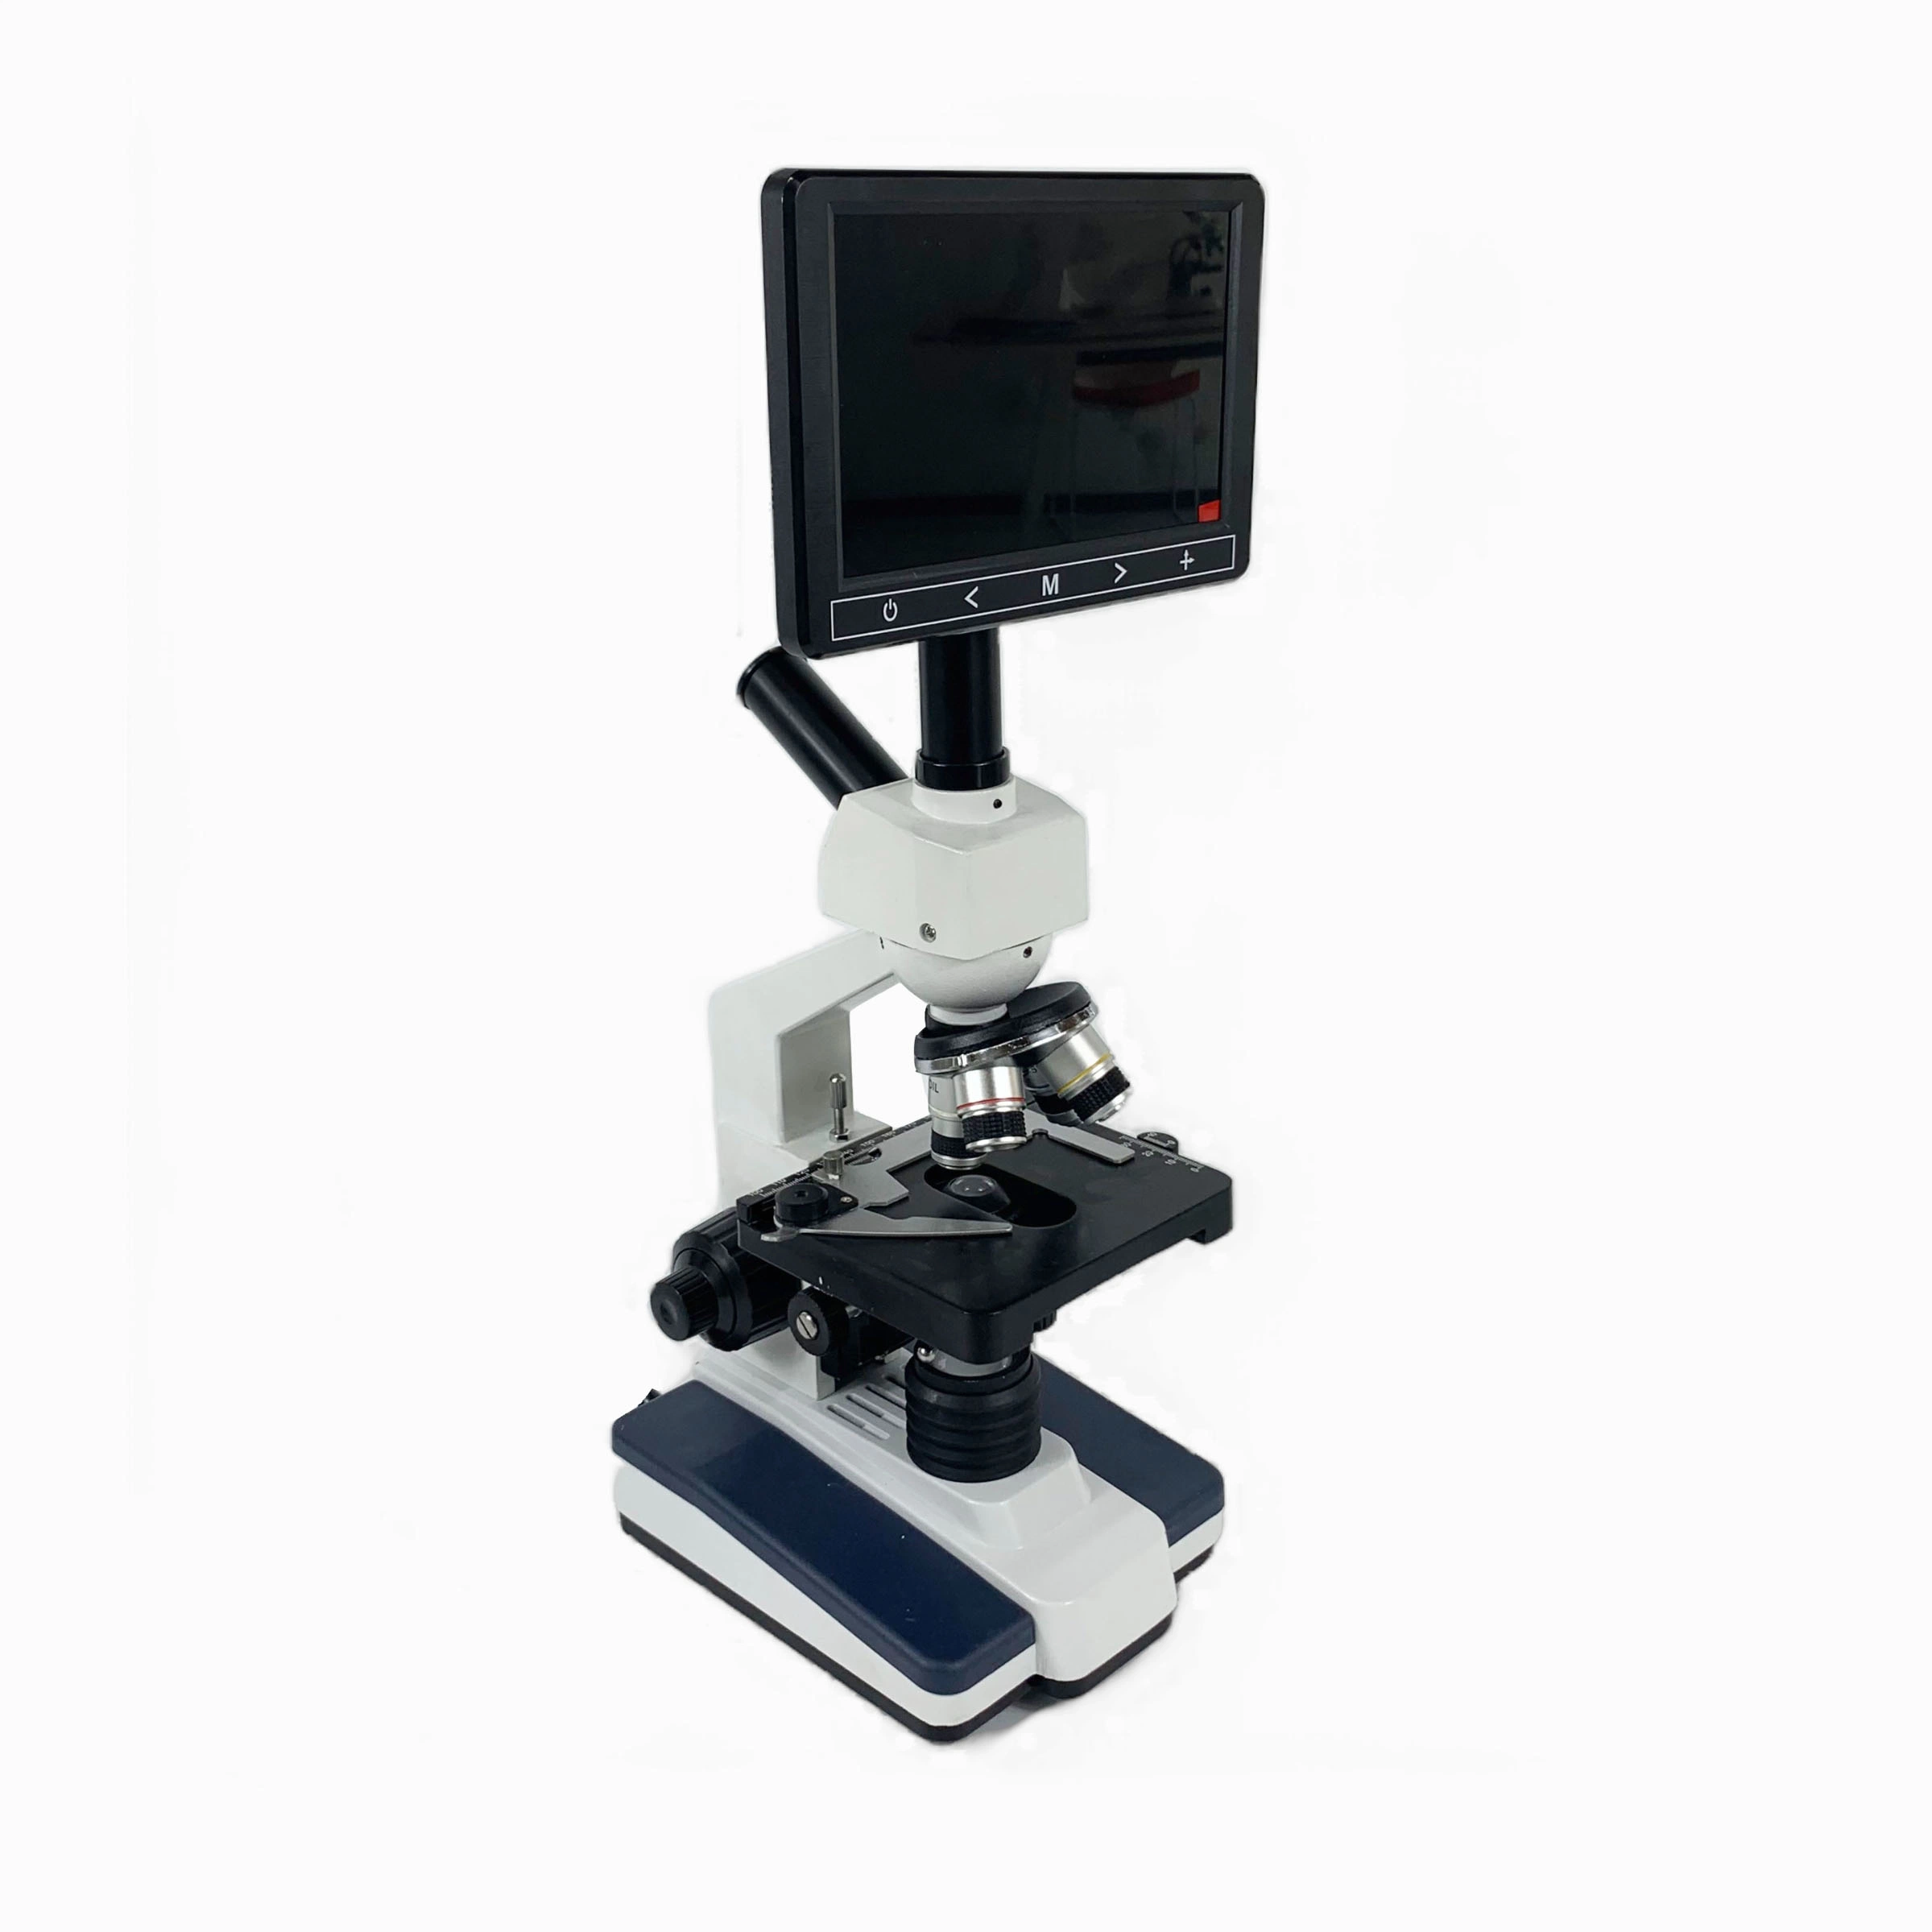 High-Quality Xsp-200V Binocular Biological Microscope with High Resolution Digital Screen